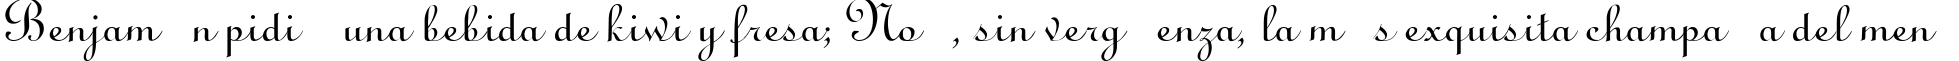 Пример написания шрифтом LinoScript текста на испанском